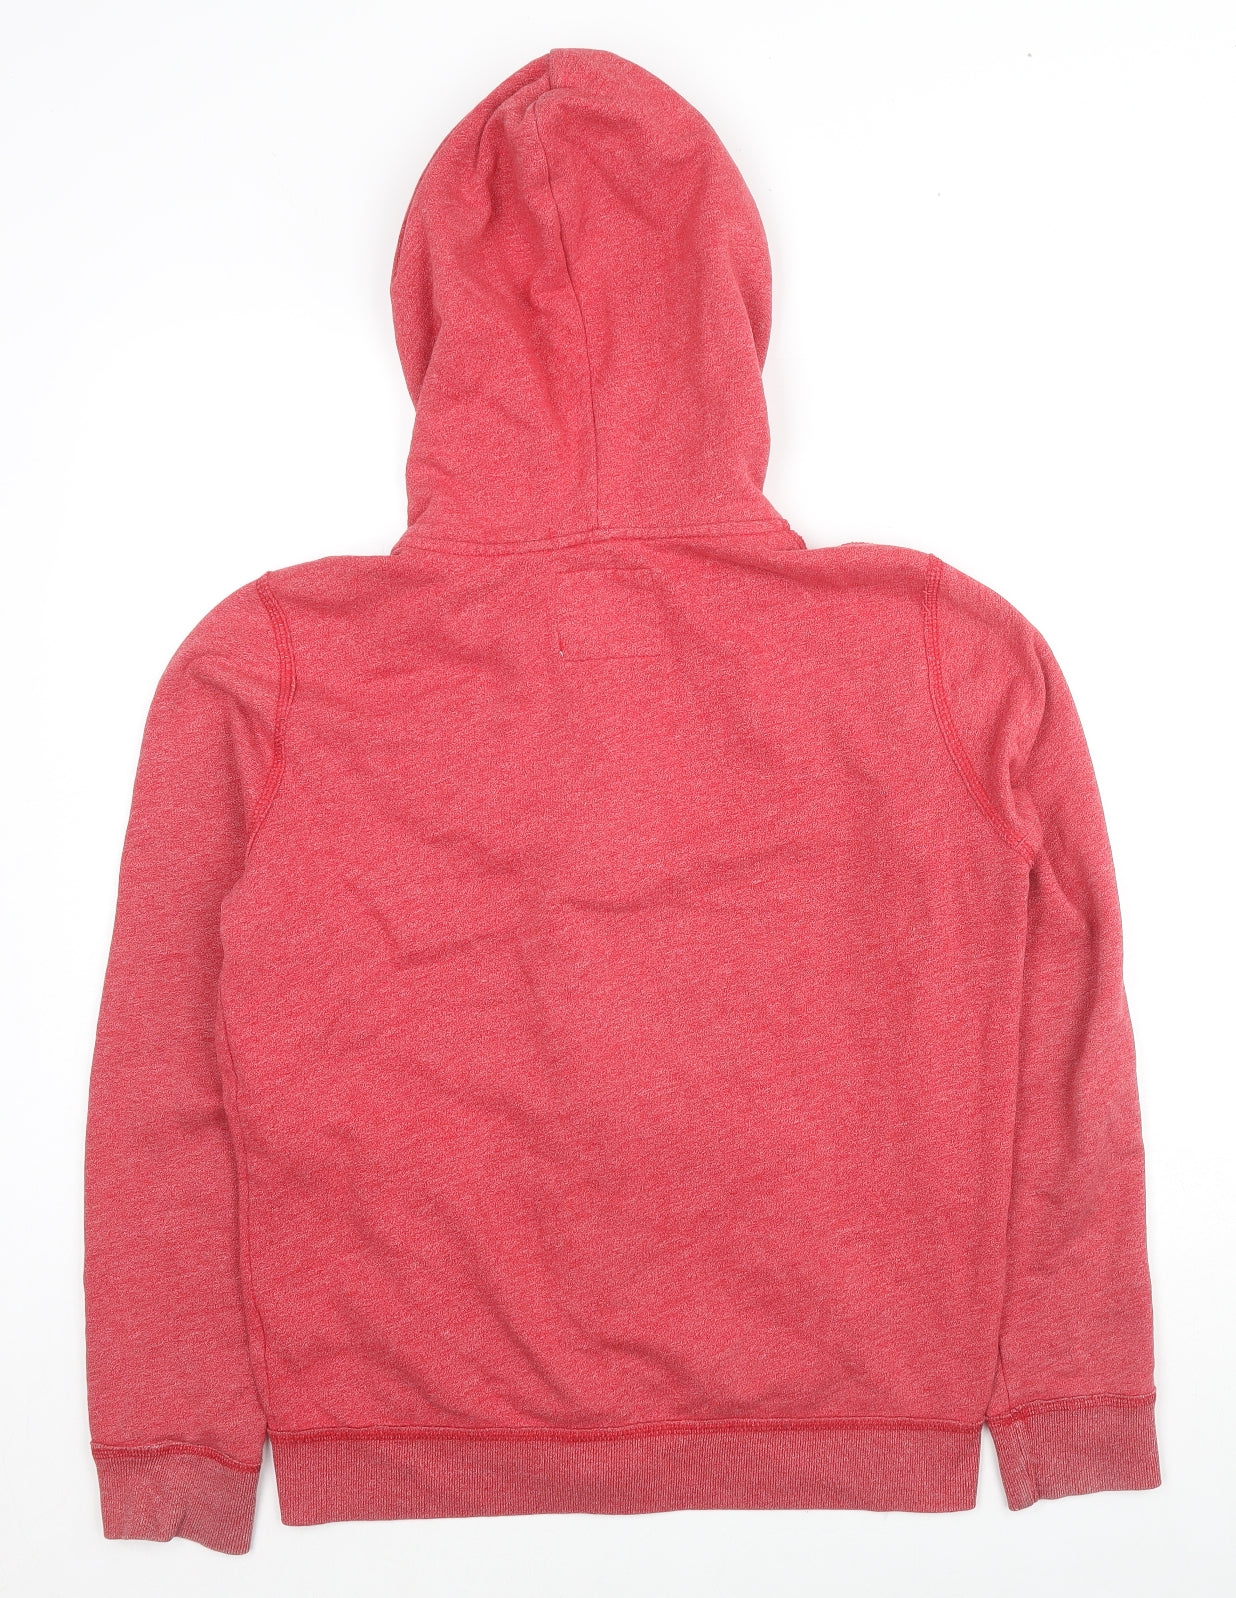 Hollister Mens Red Cotton Full Zip Hoodie Size S - Logo, Pocket, Drawstring